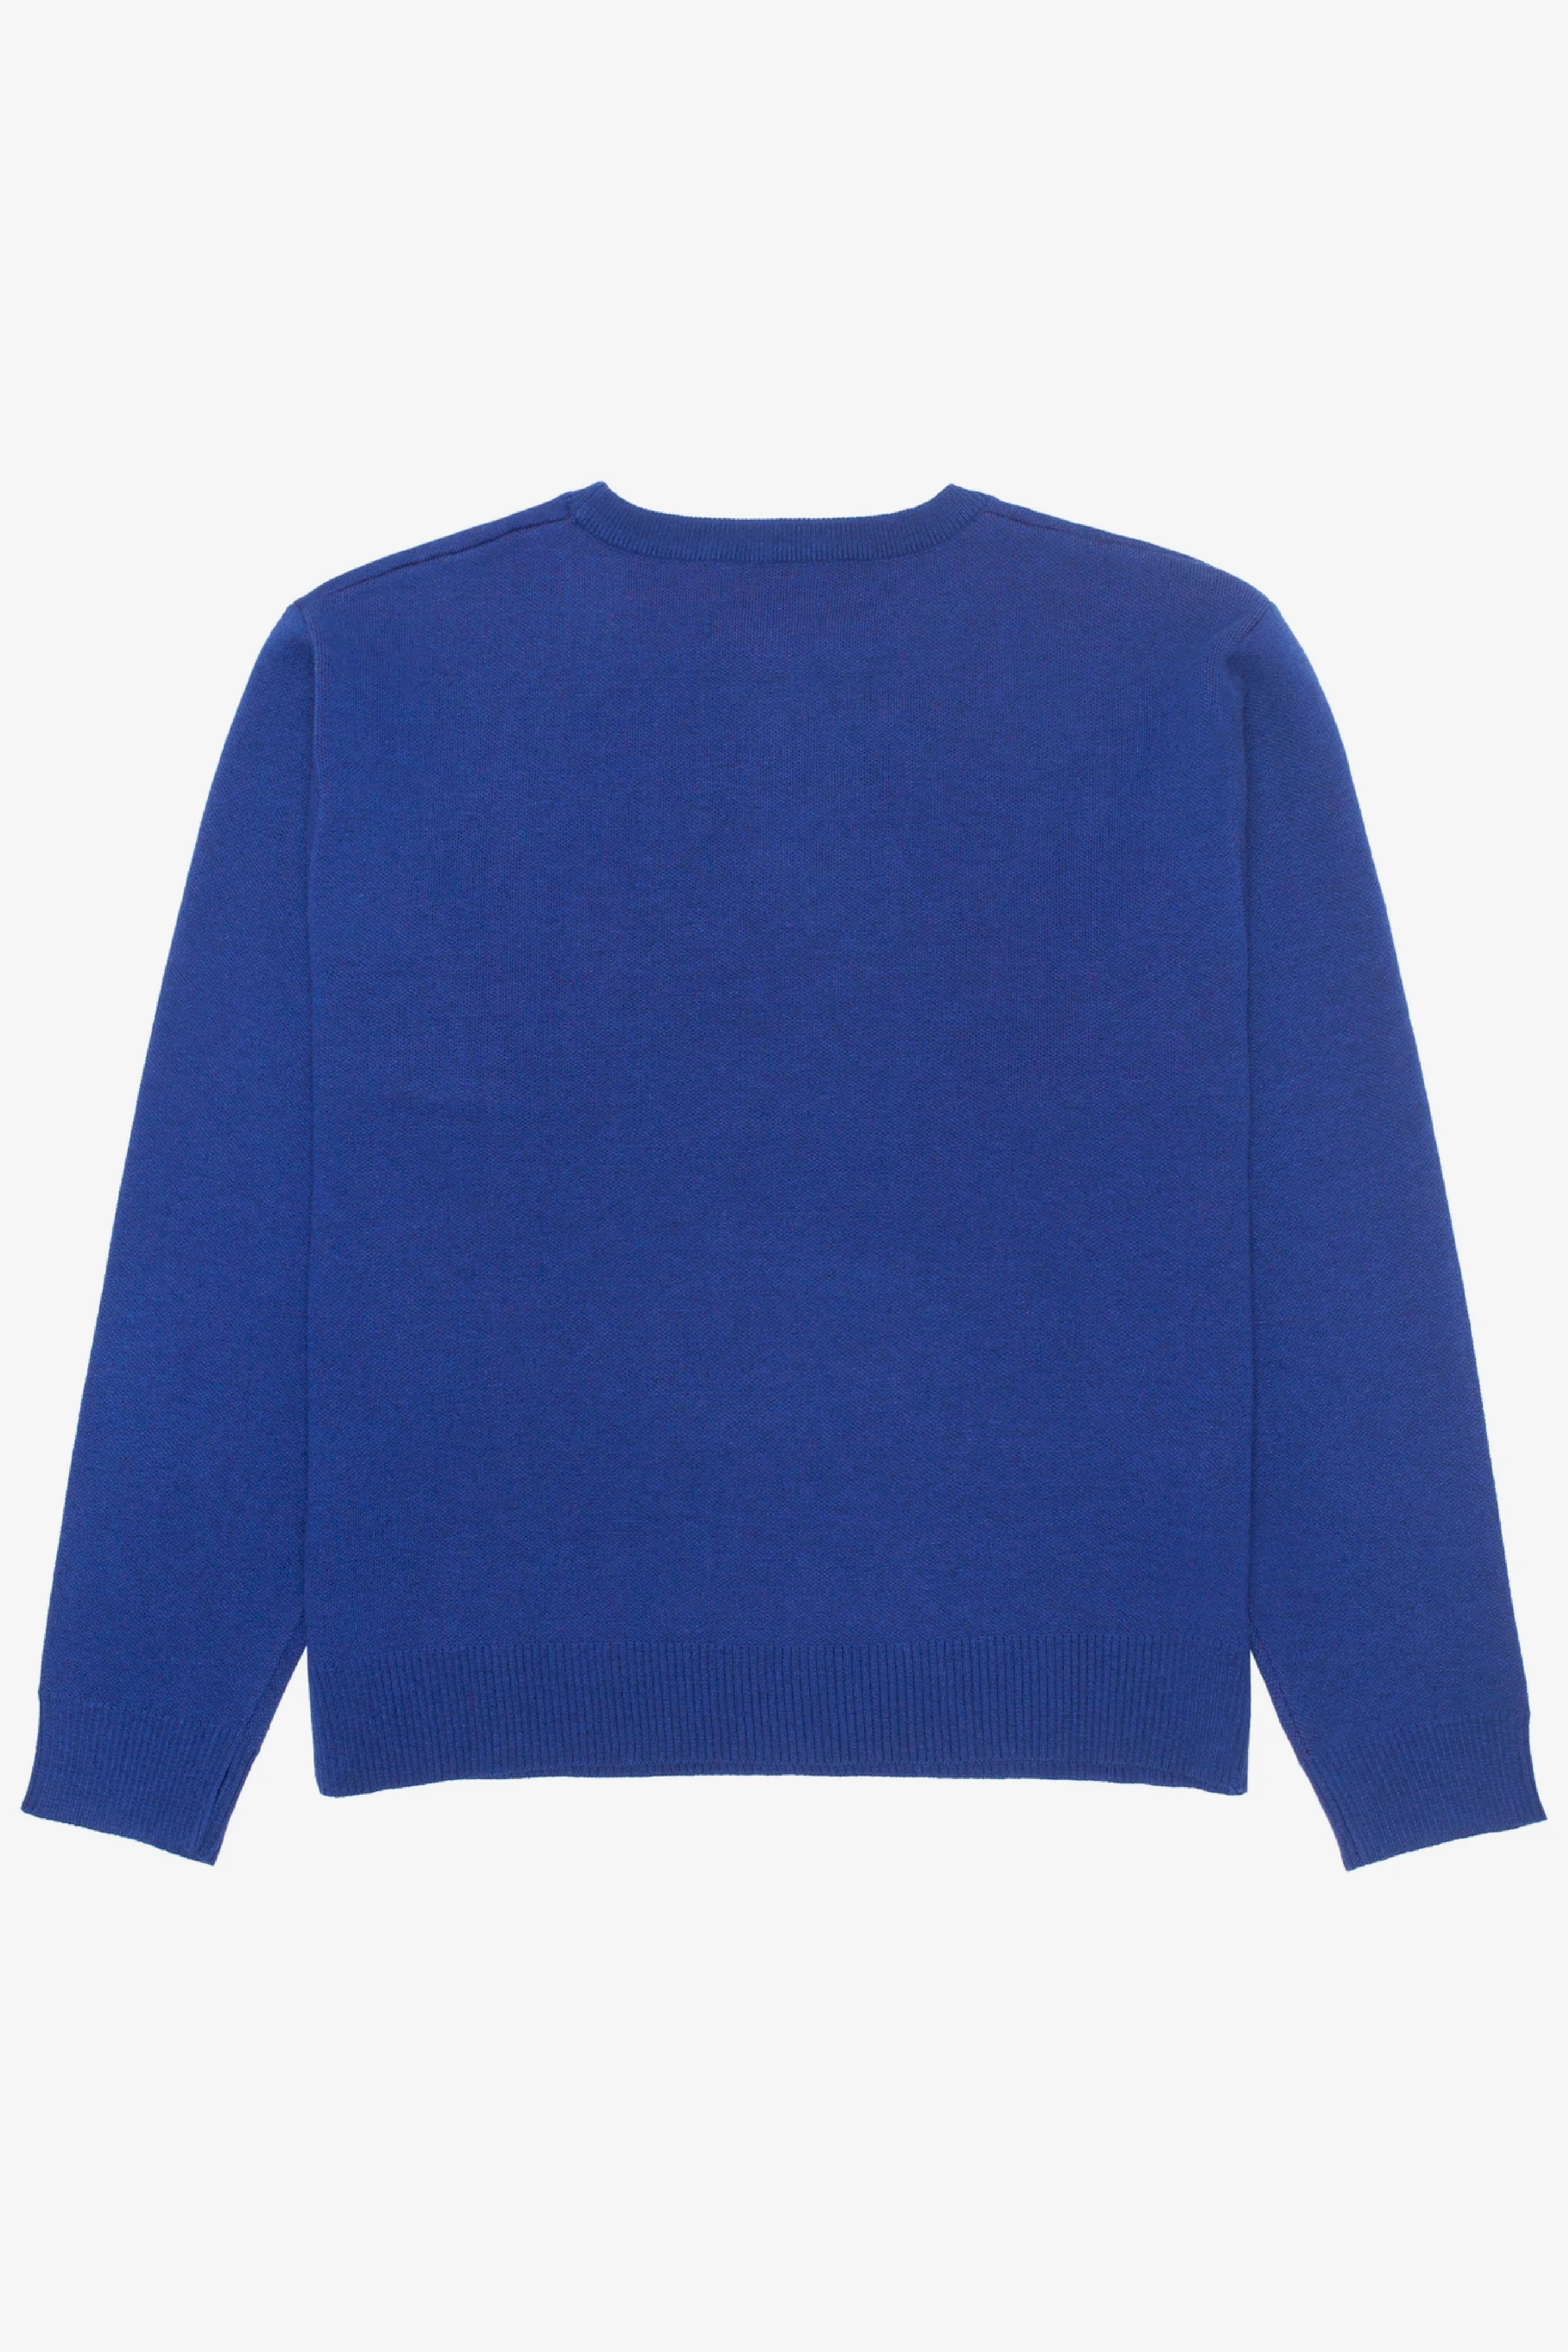 Selectshop FRAME - FUCKING AWESOME Embrace Sweater Sweats-Knits Dubai